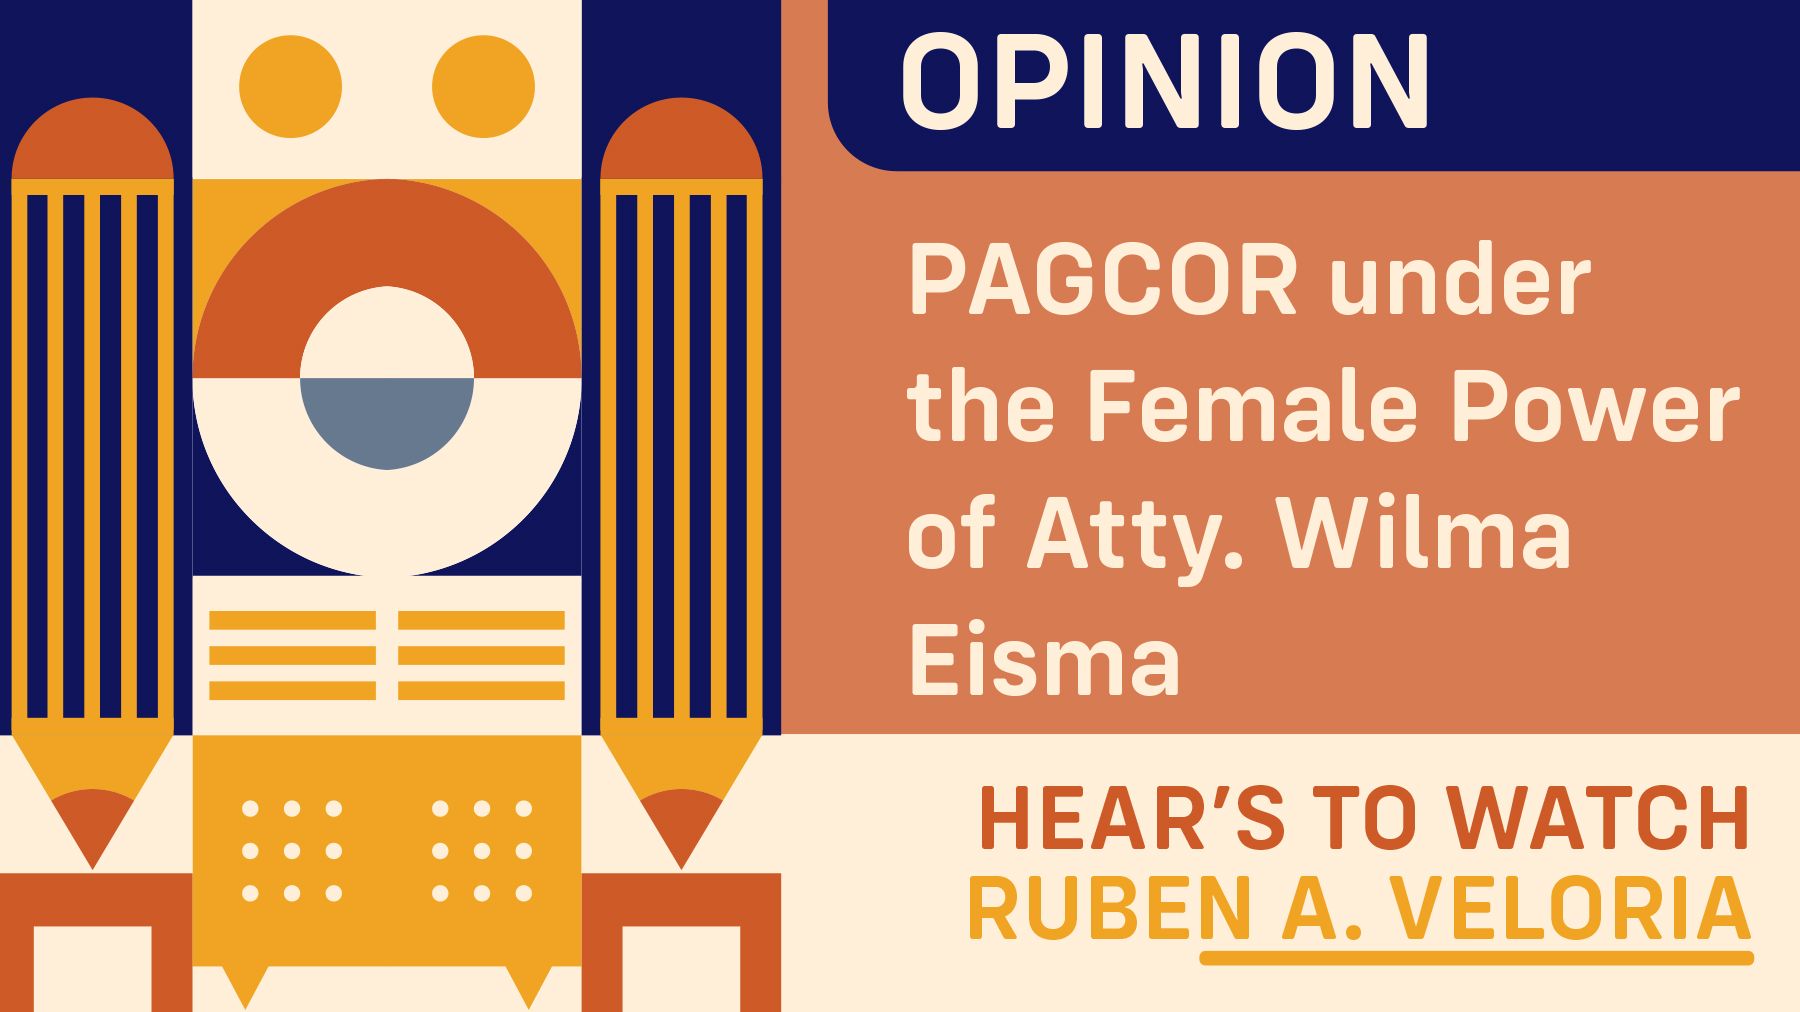 PAGCOR under the Female Power of Atty. Wilma Eisma